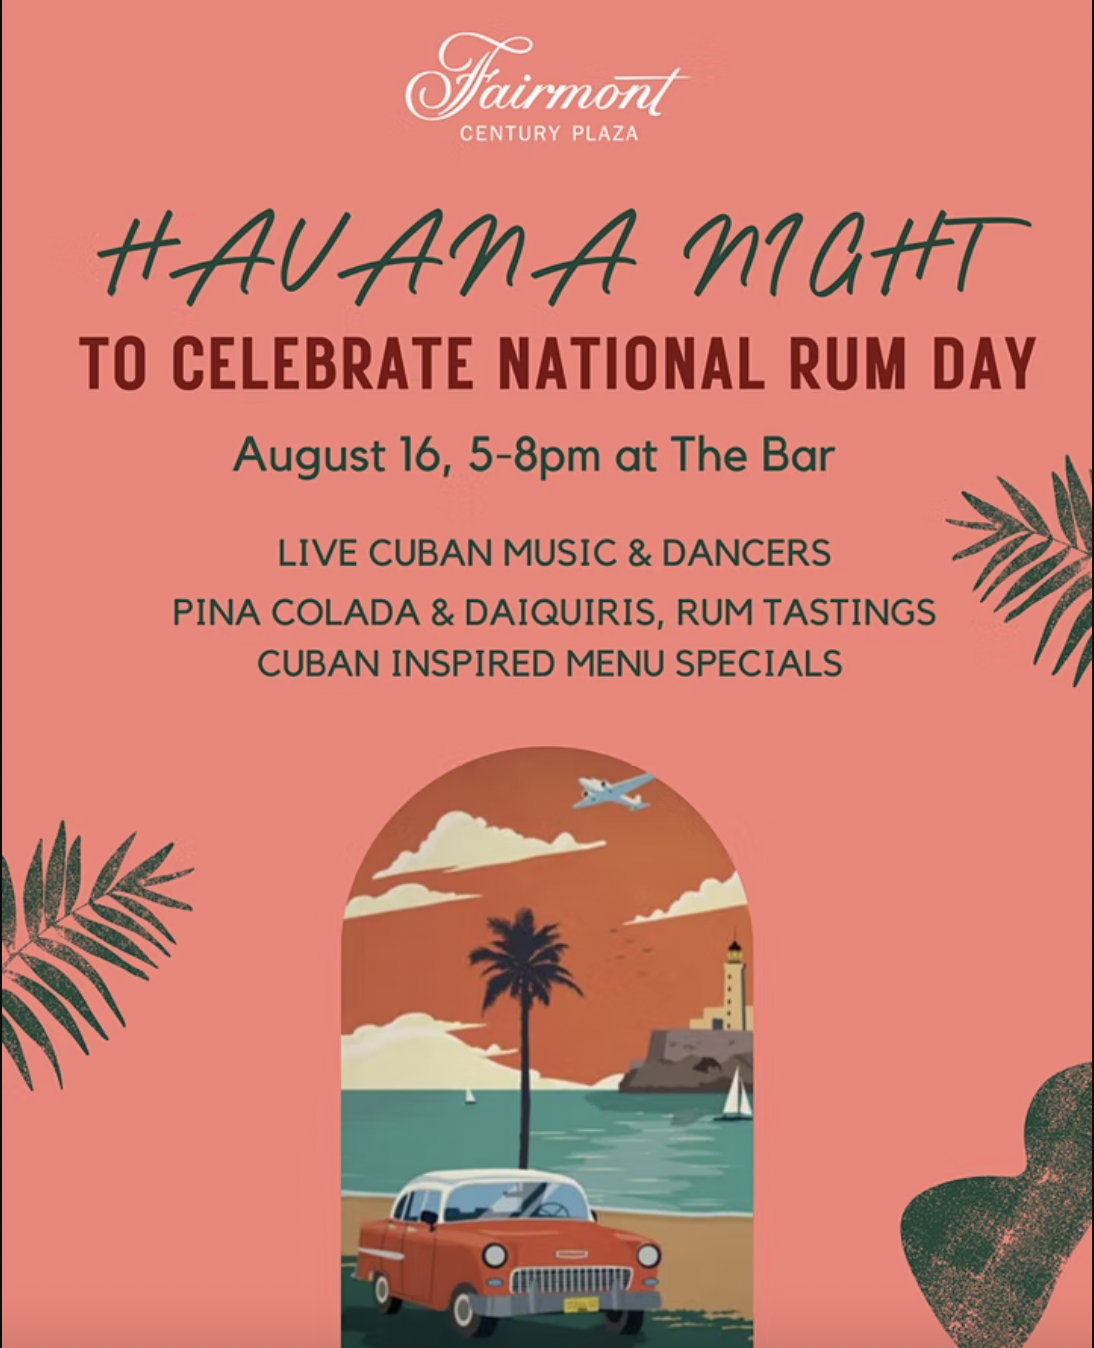 Havana Night to Celebrate National Rum Day 